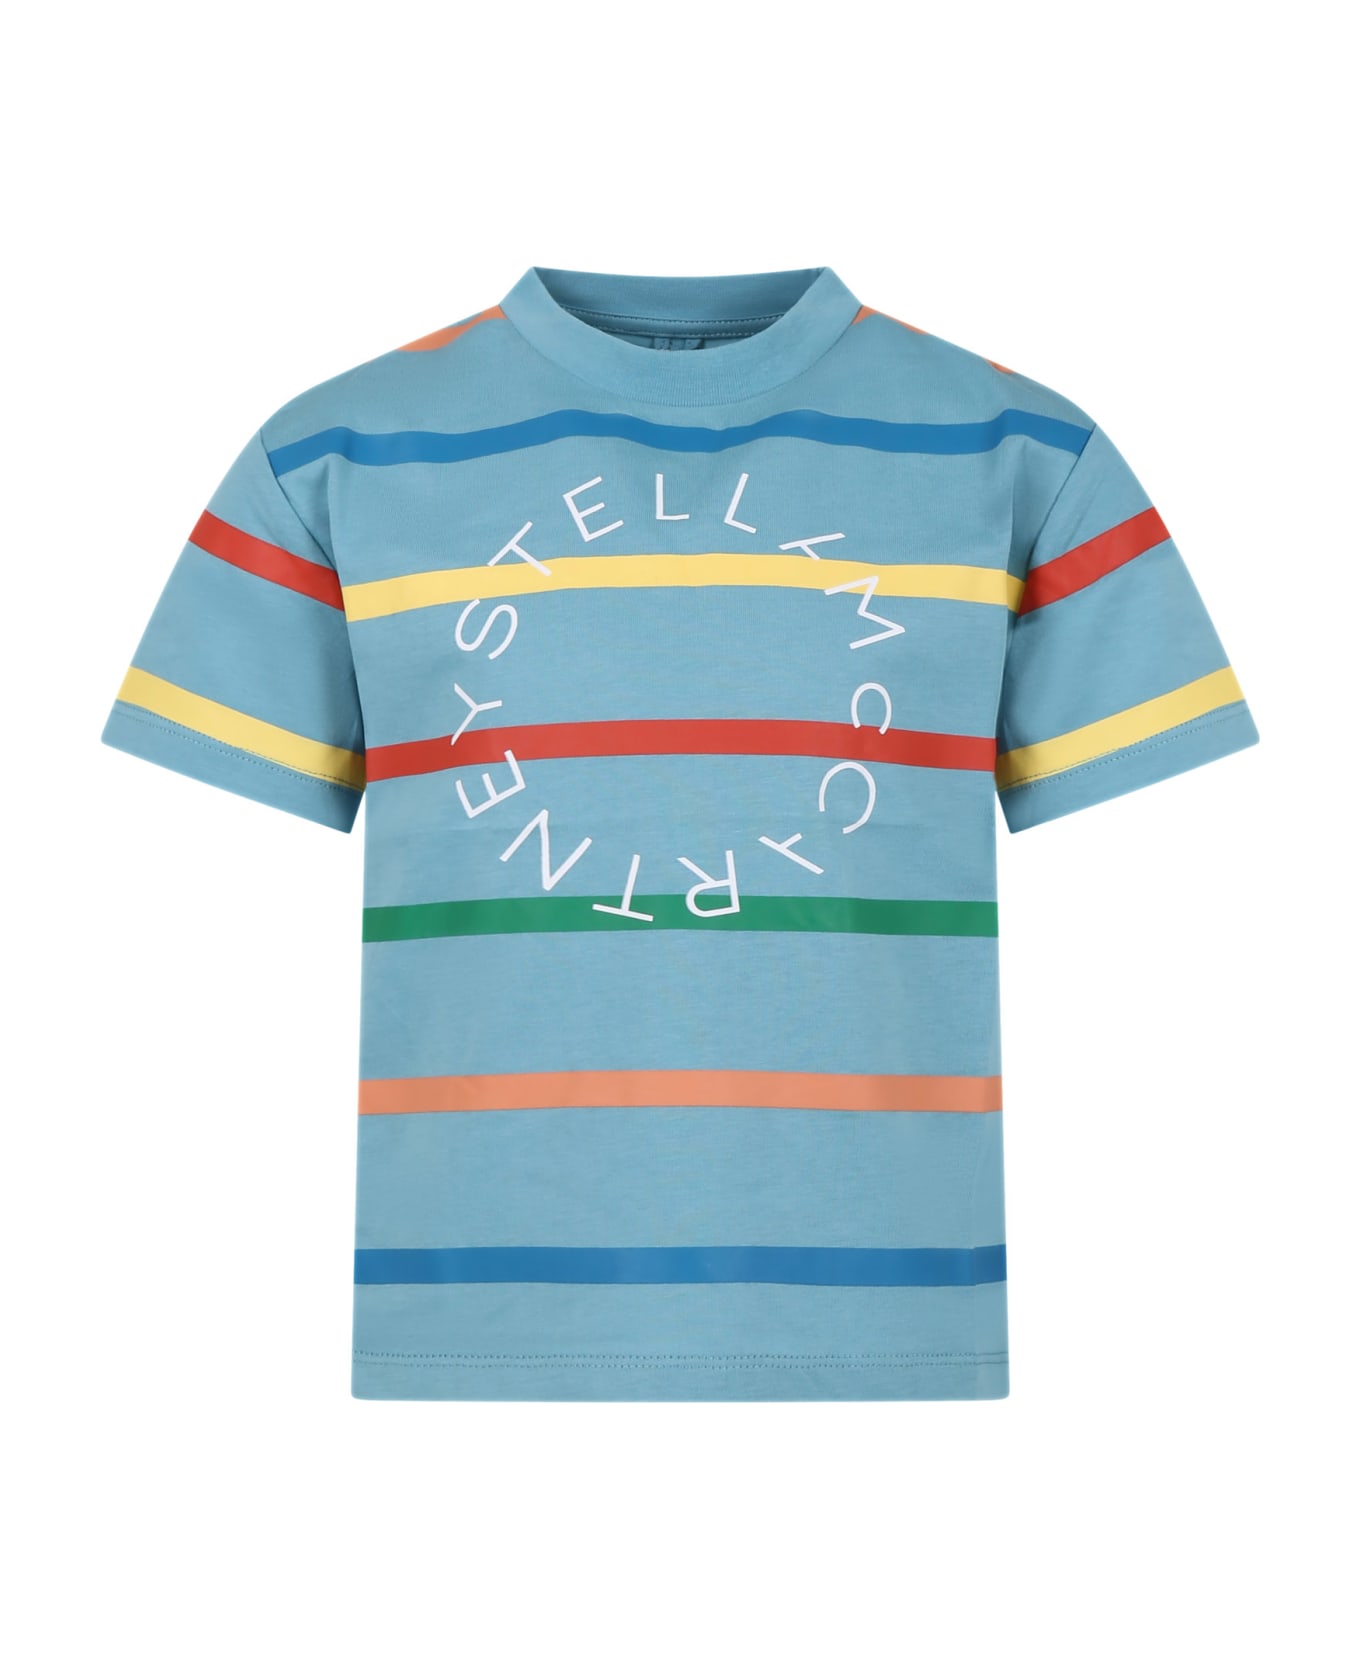 Stella McCartney Kids Light Blue T-shirt For Kids With Logo And Multicolor Stripes - Light Blue